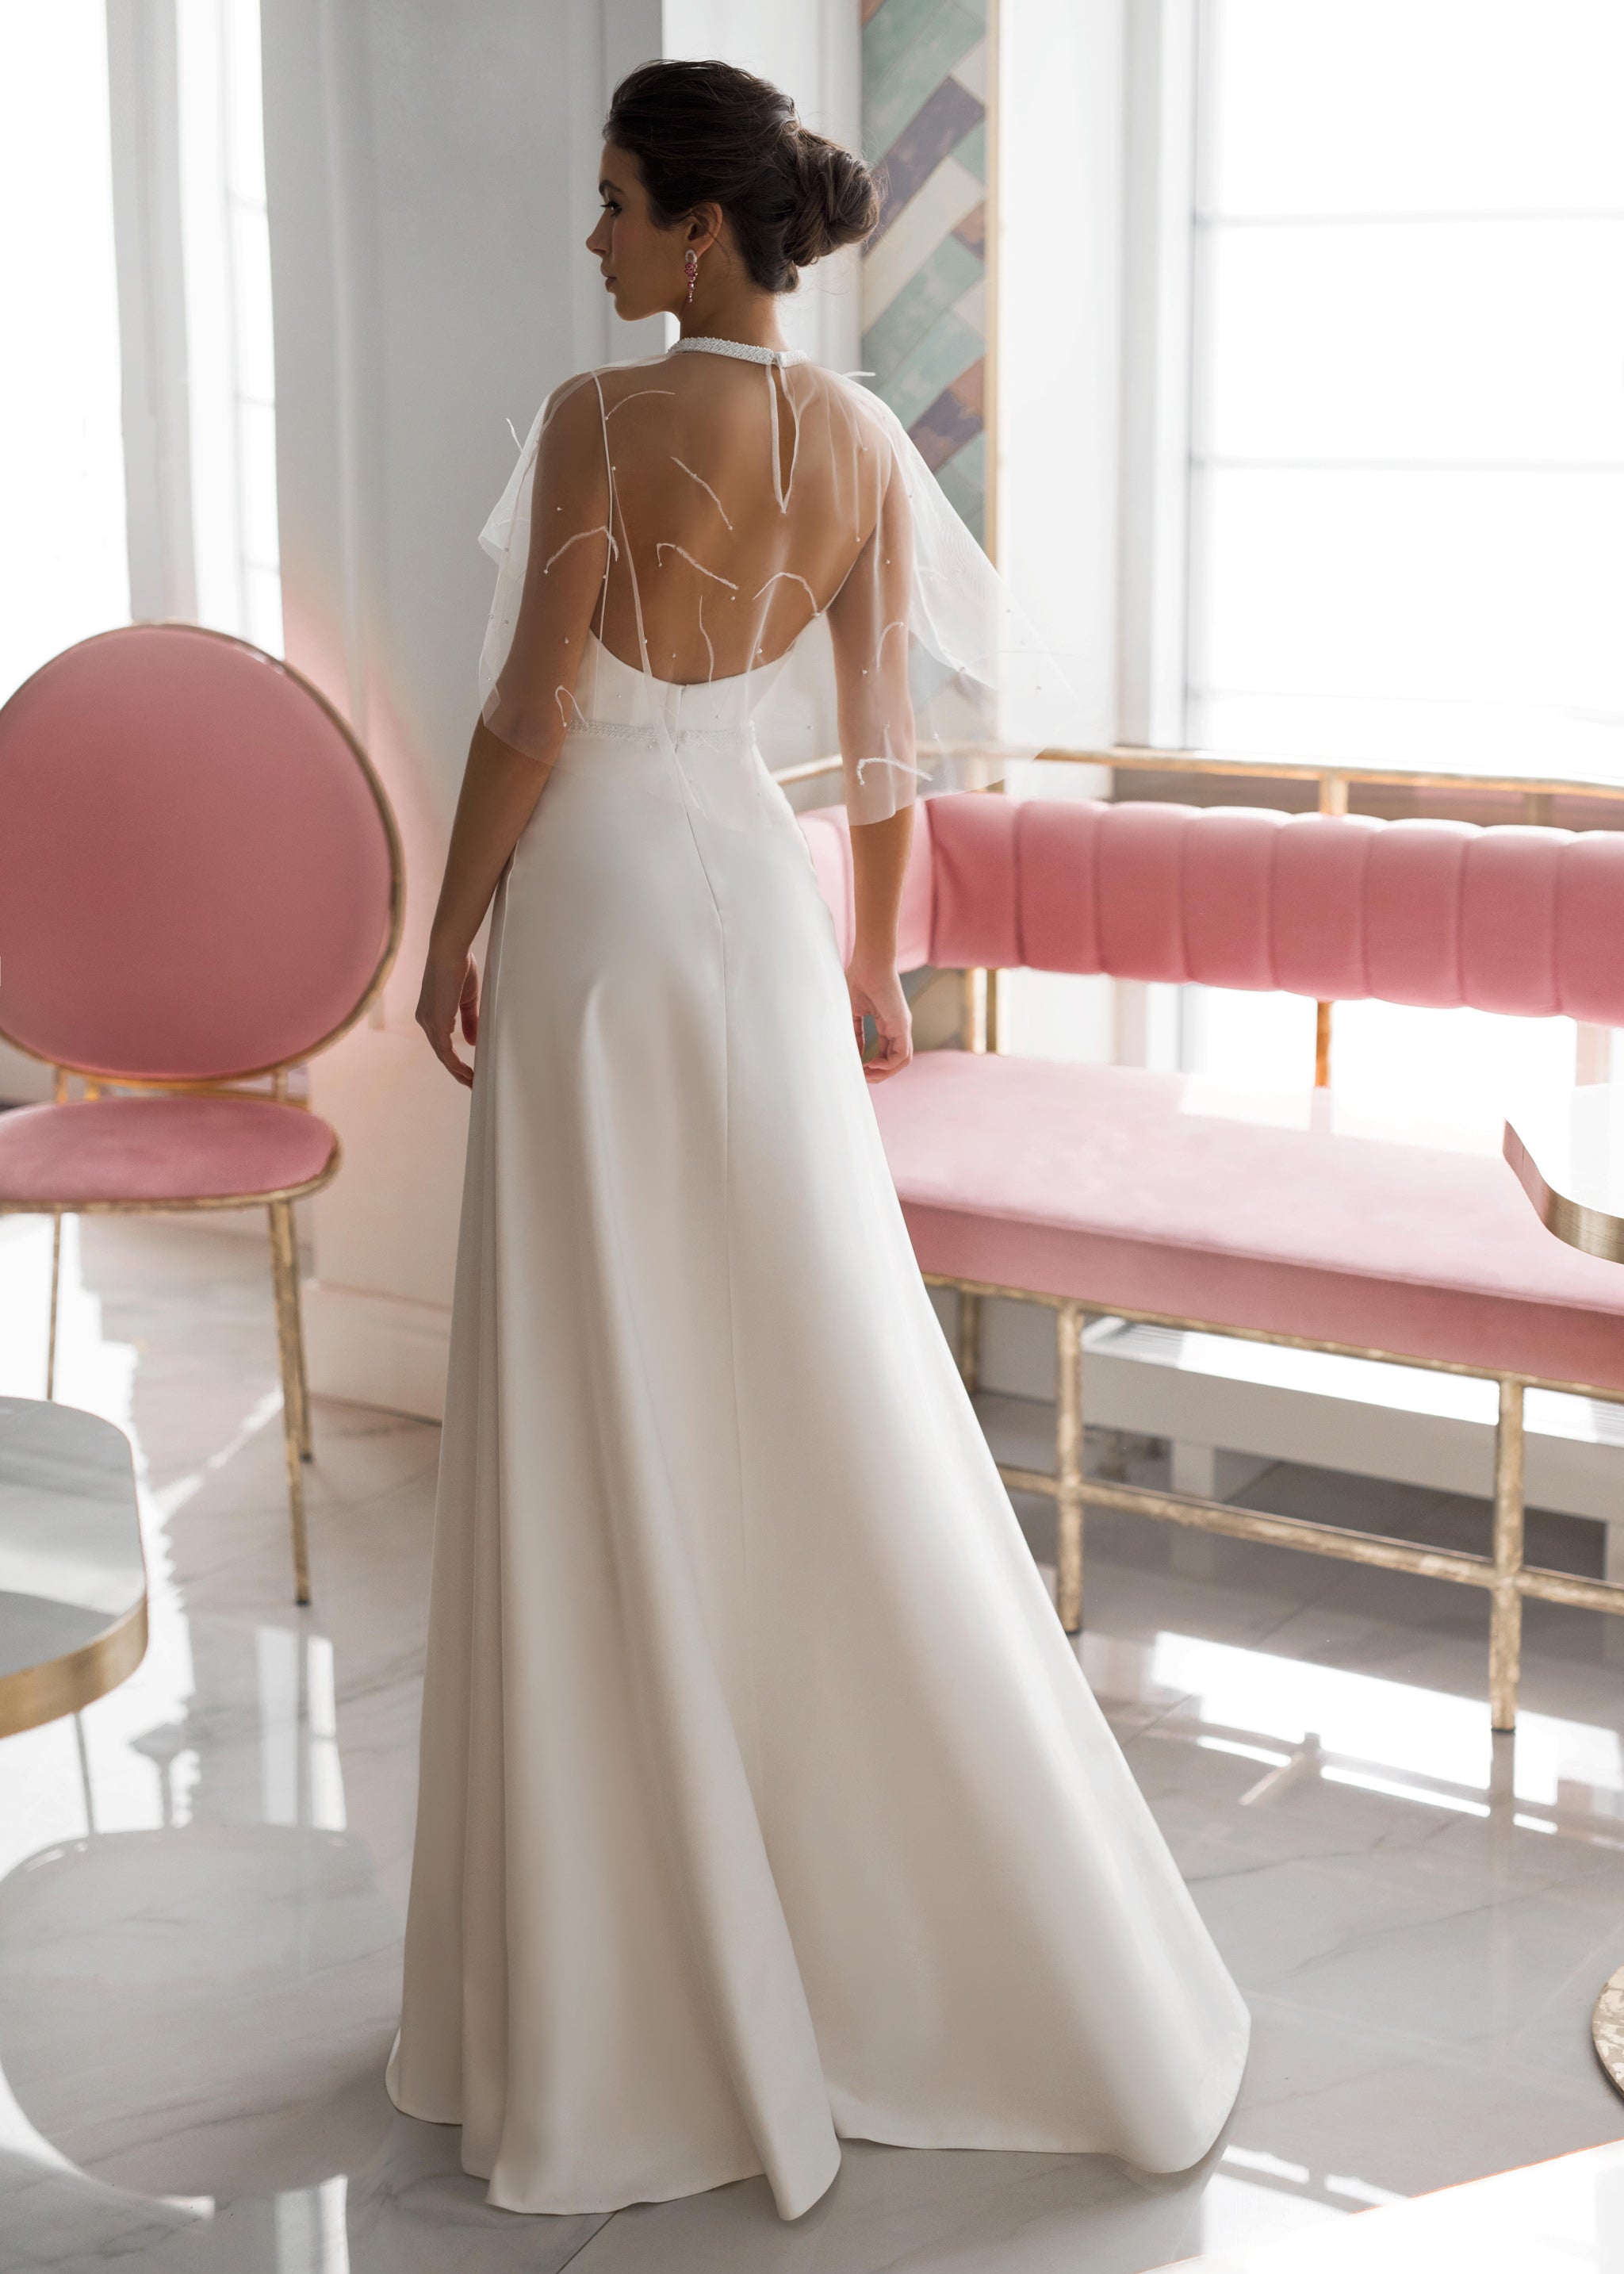 Simple white wedding dress.